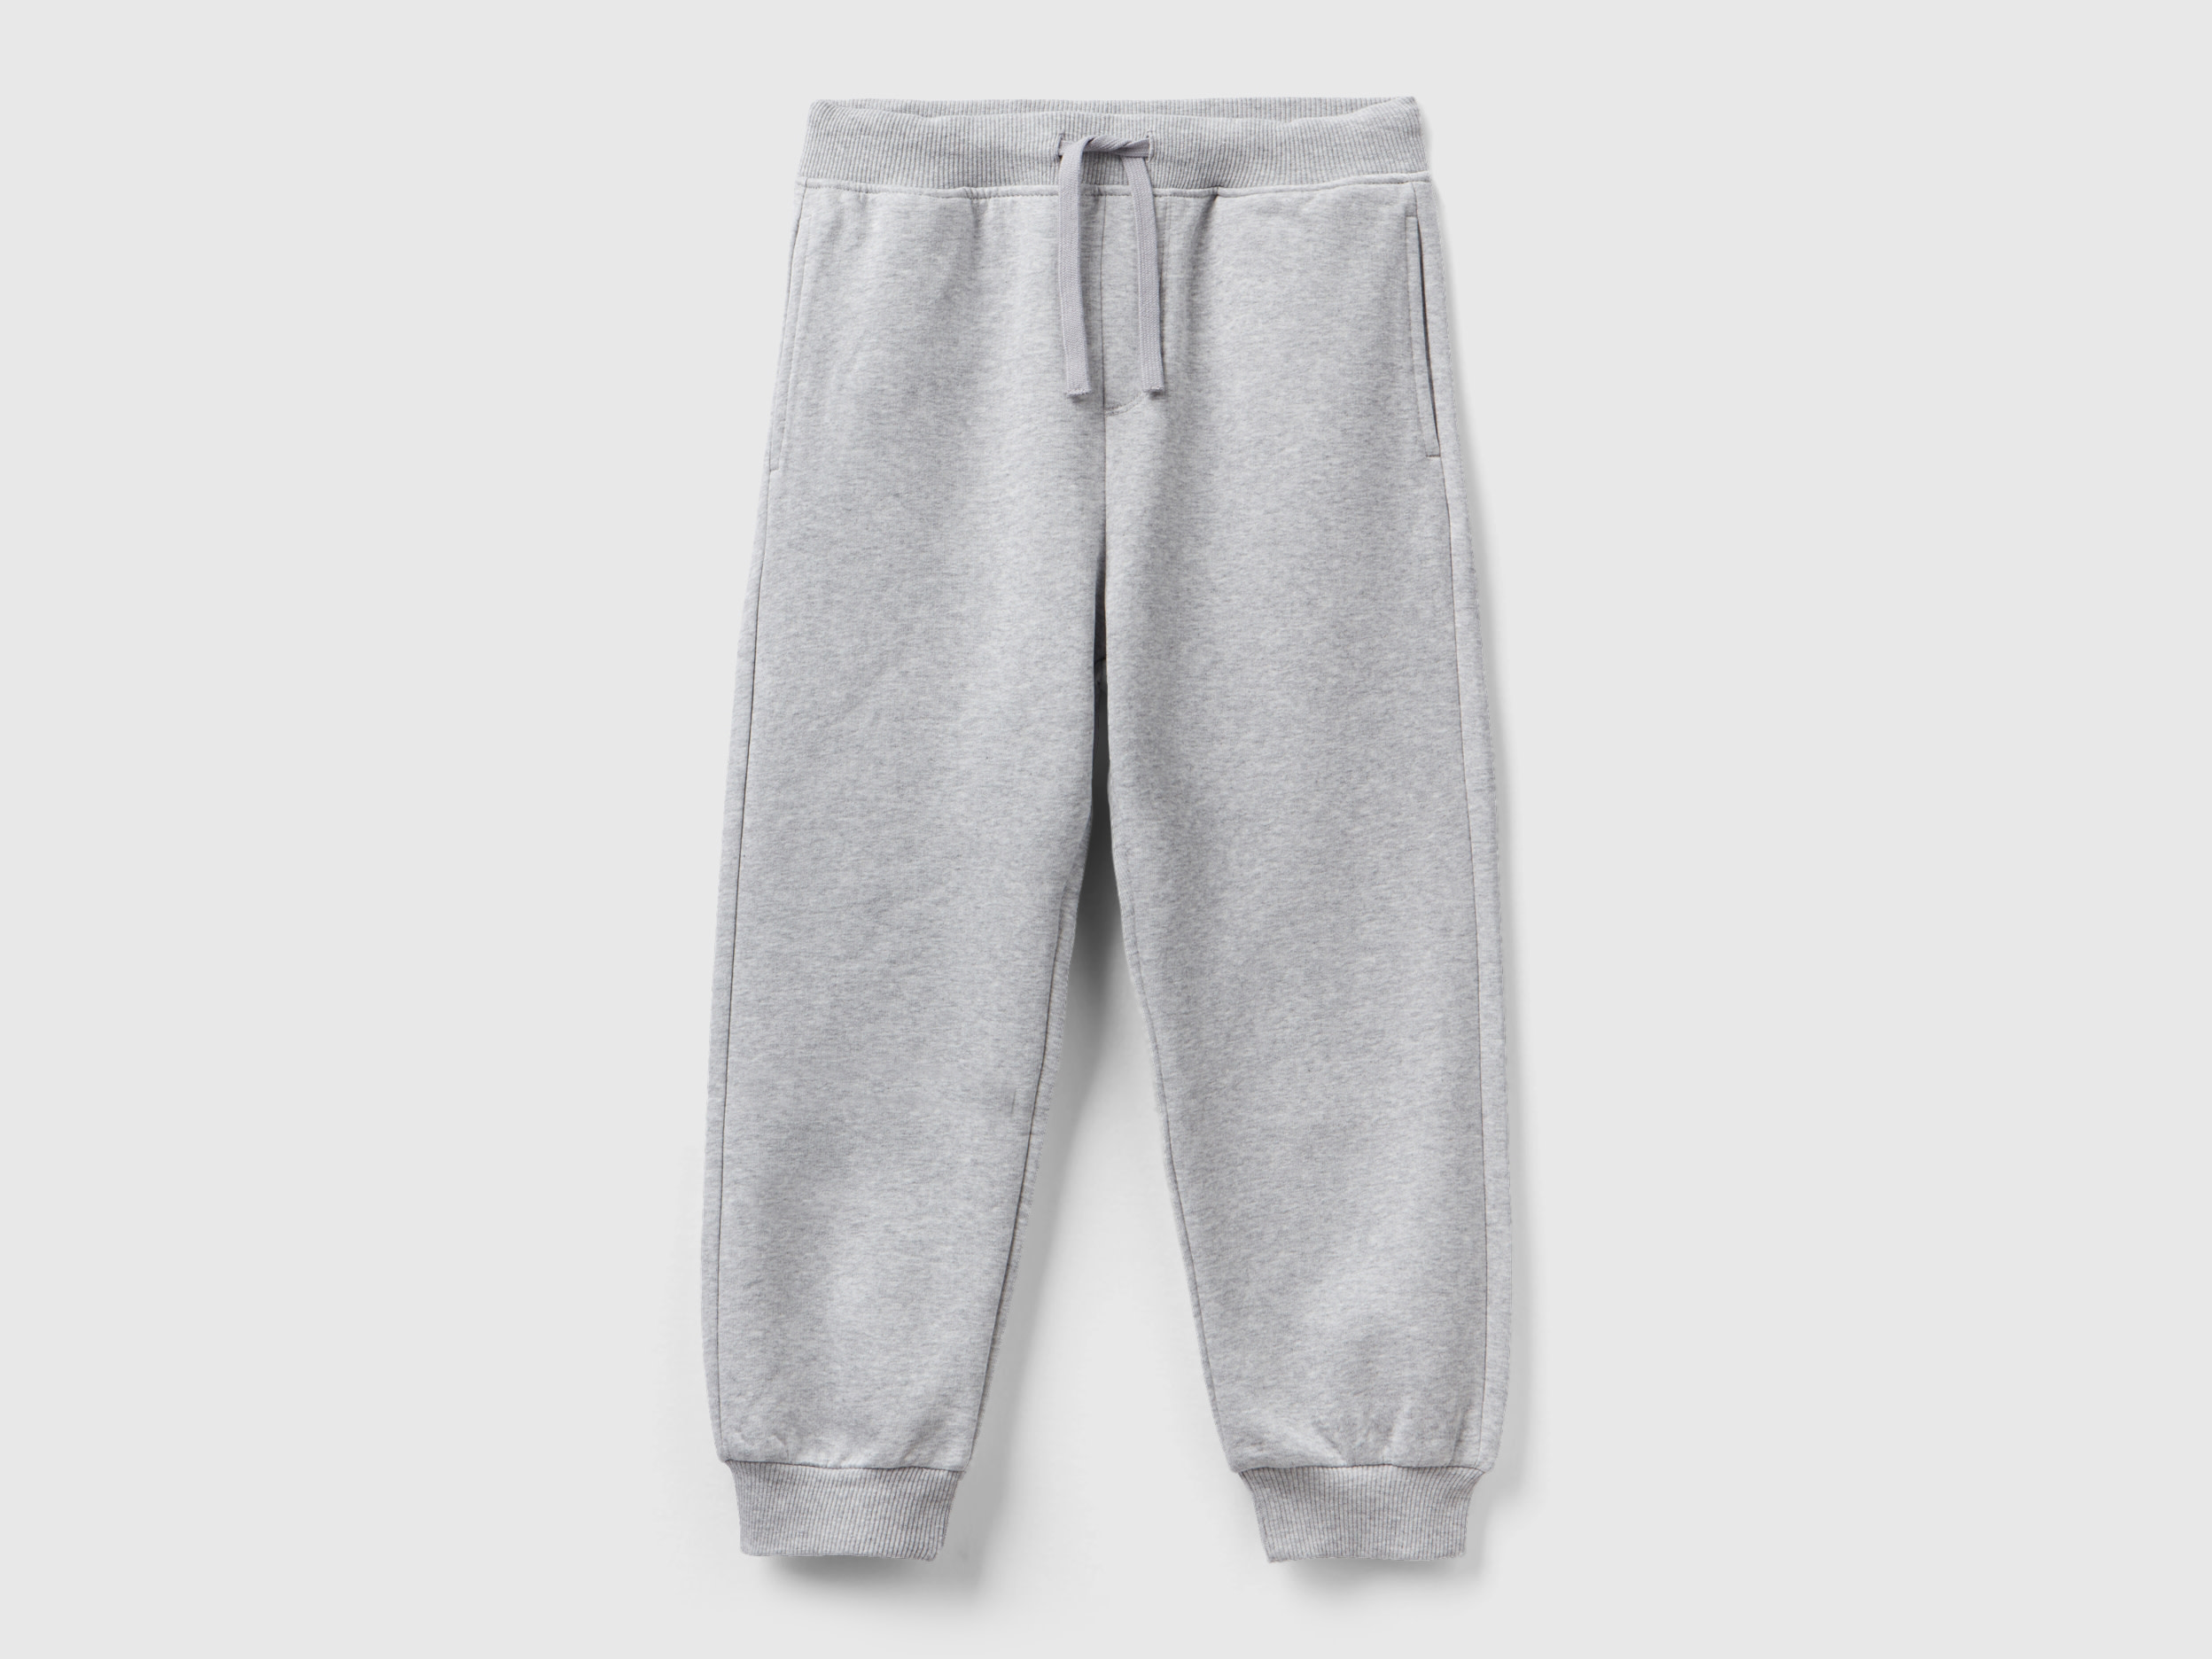 Benetton, Warm Sweatpants With Print, size L, Light Gray, Kids